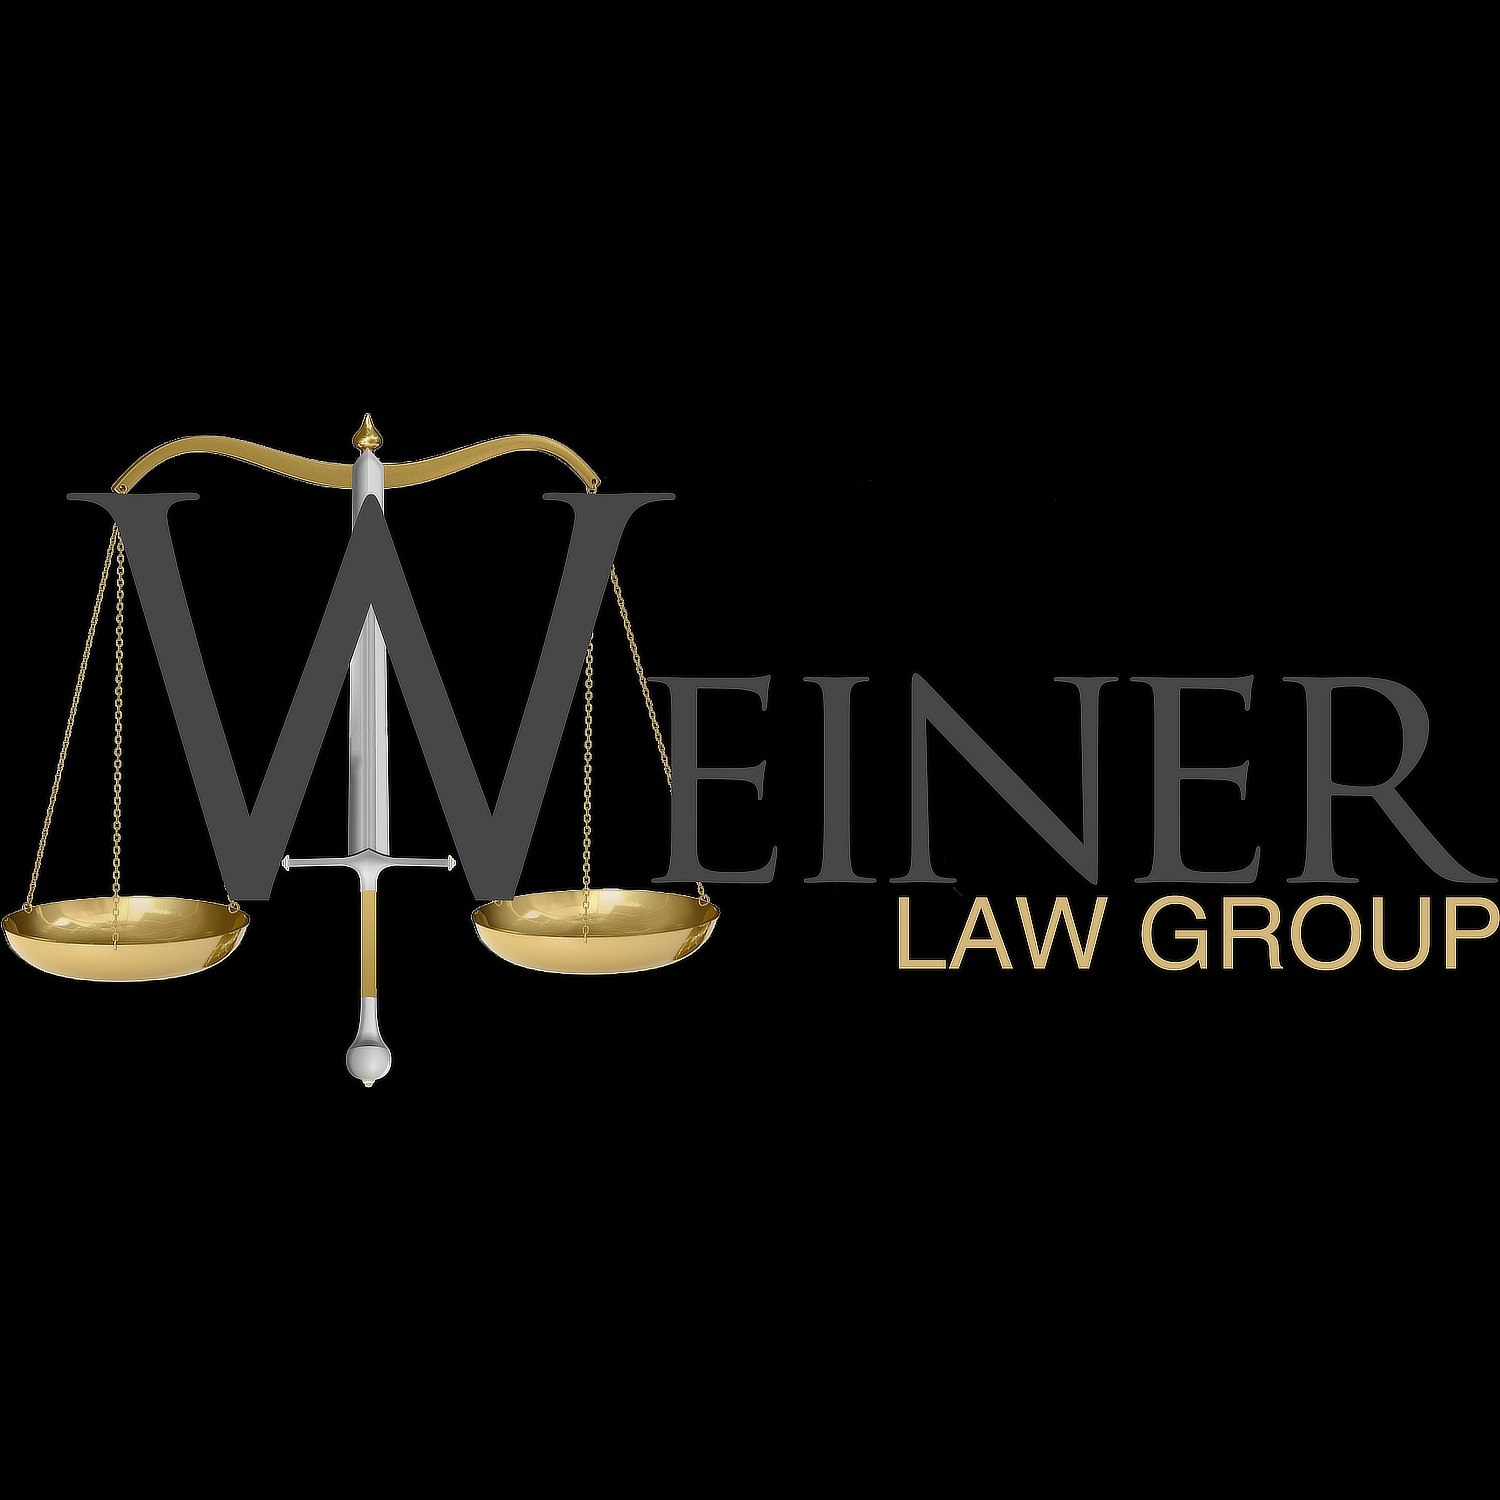 Weiner Law Group - Las Vegas, NV 89102 - (702)202-0500 | ShowMeLocal.com